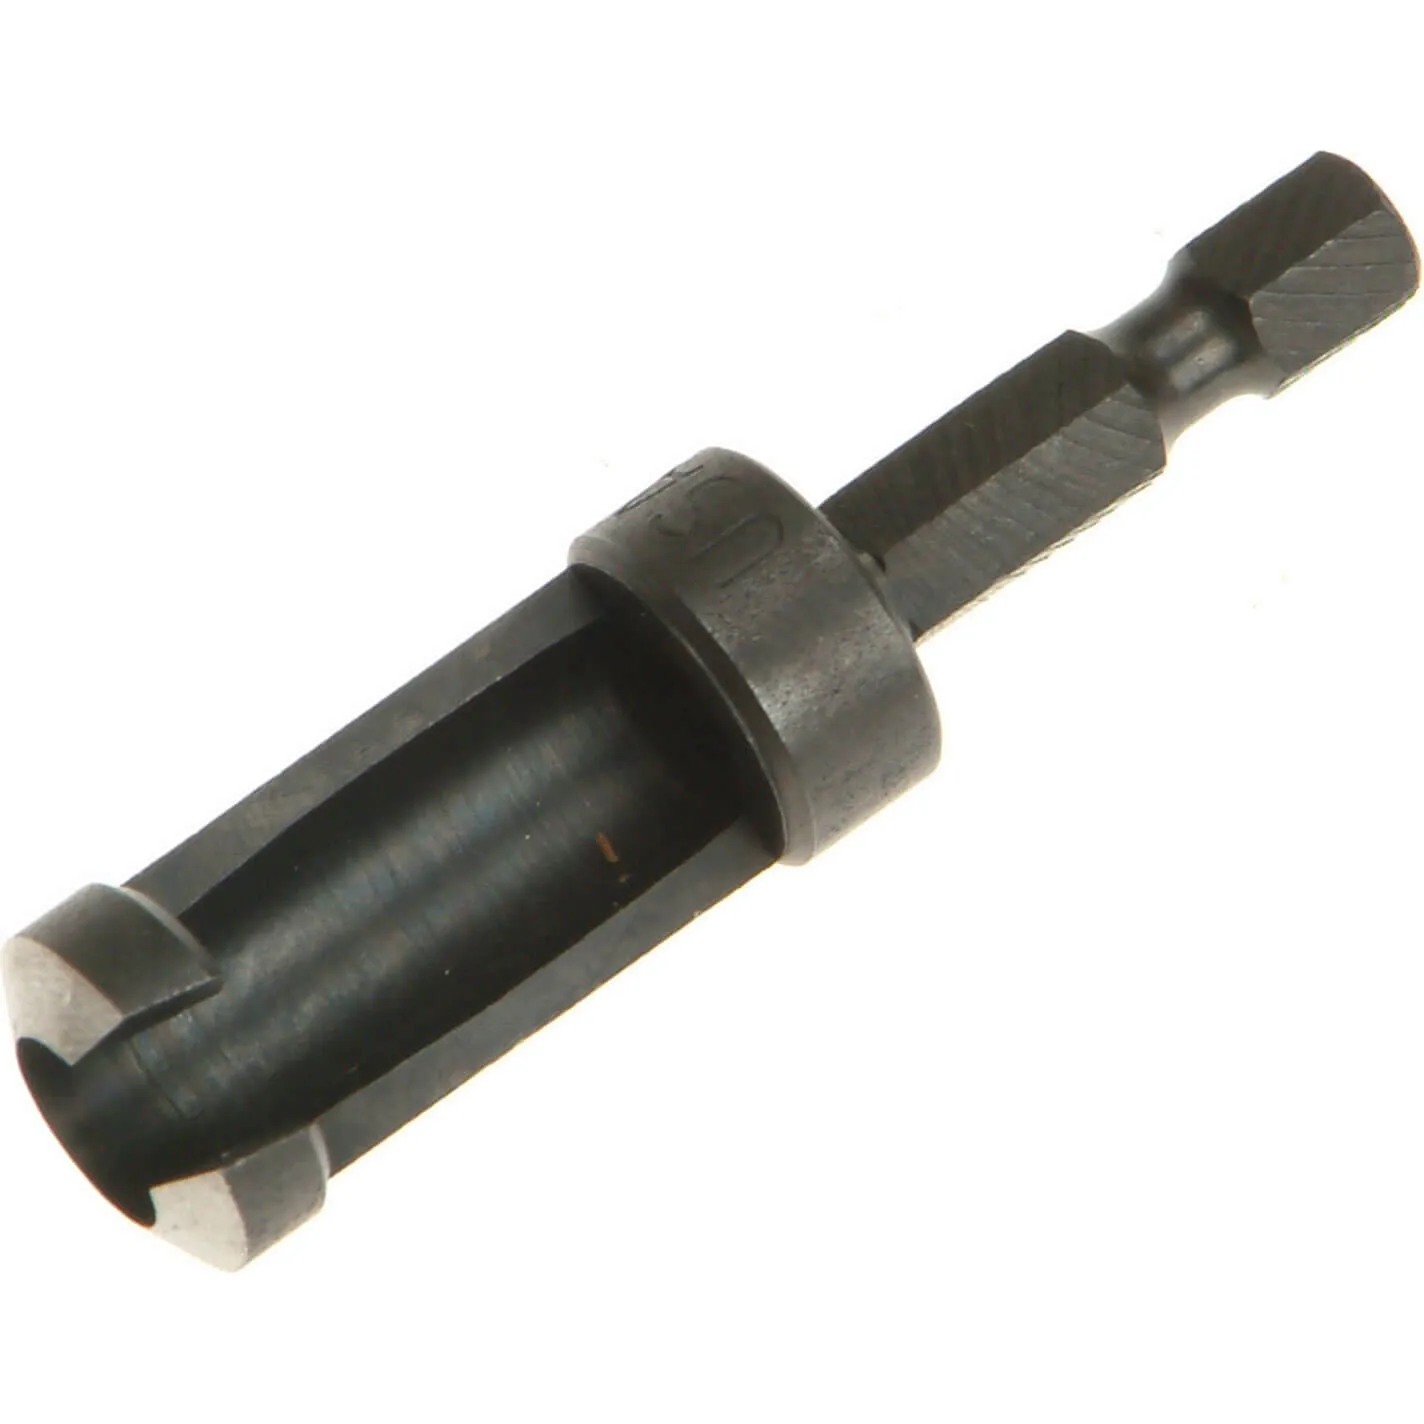 Disston Plug Cutter - Size 8